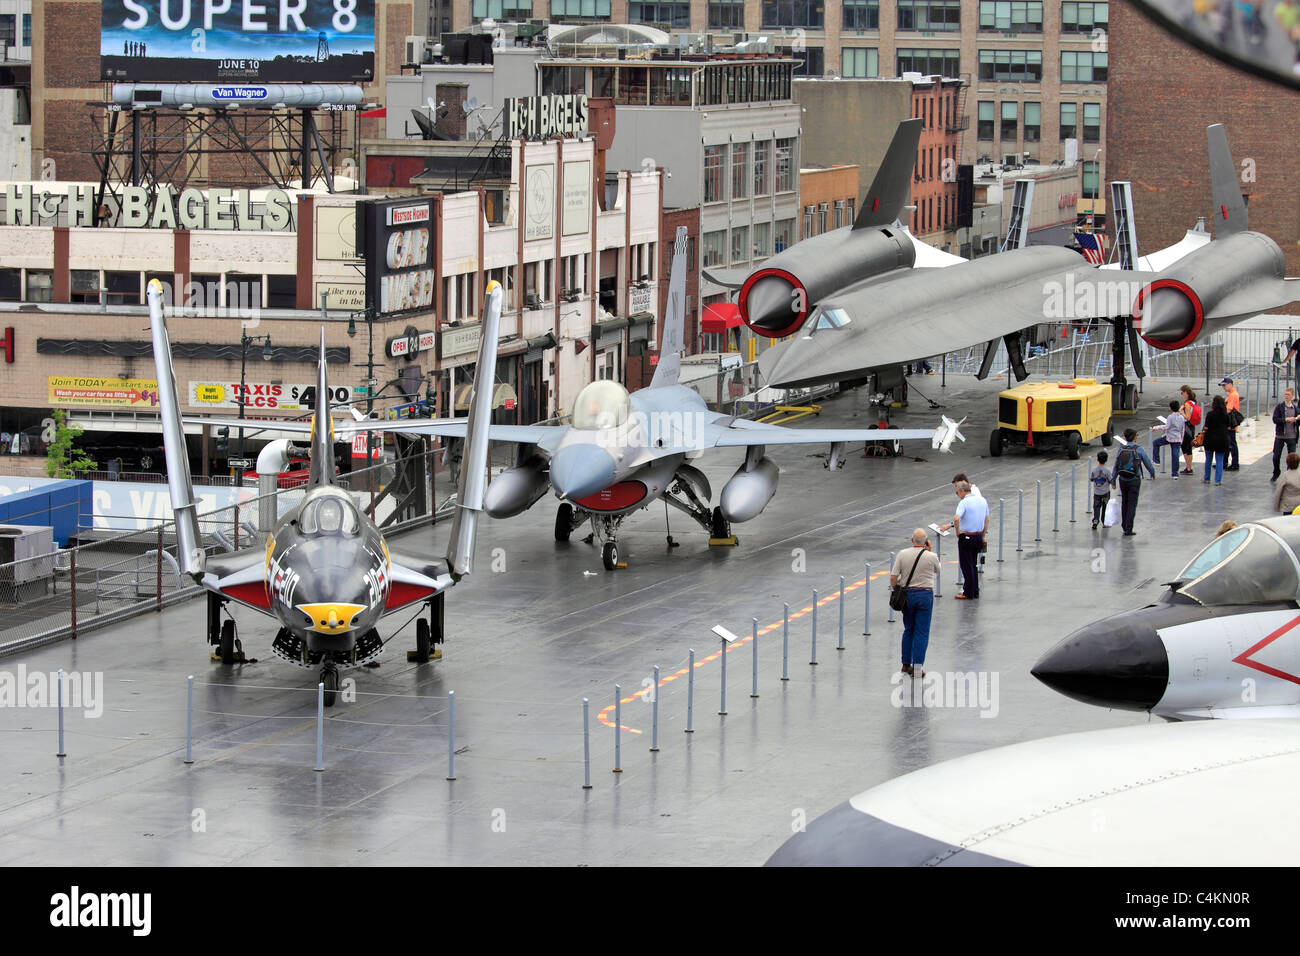 Flugzeuge auf dem Flugdeck der USS Intrepid Aircraft Carrier Museum Pier 86 Hudson River Manhattan New York City Stockfoto